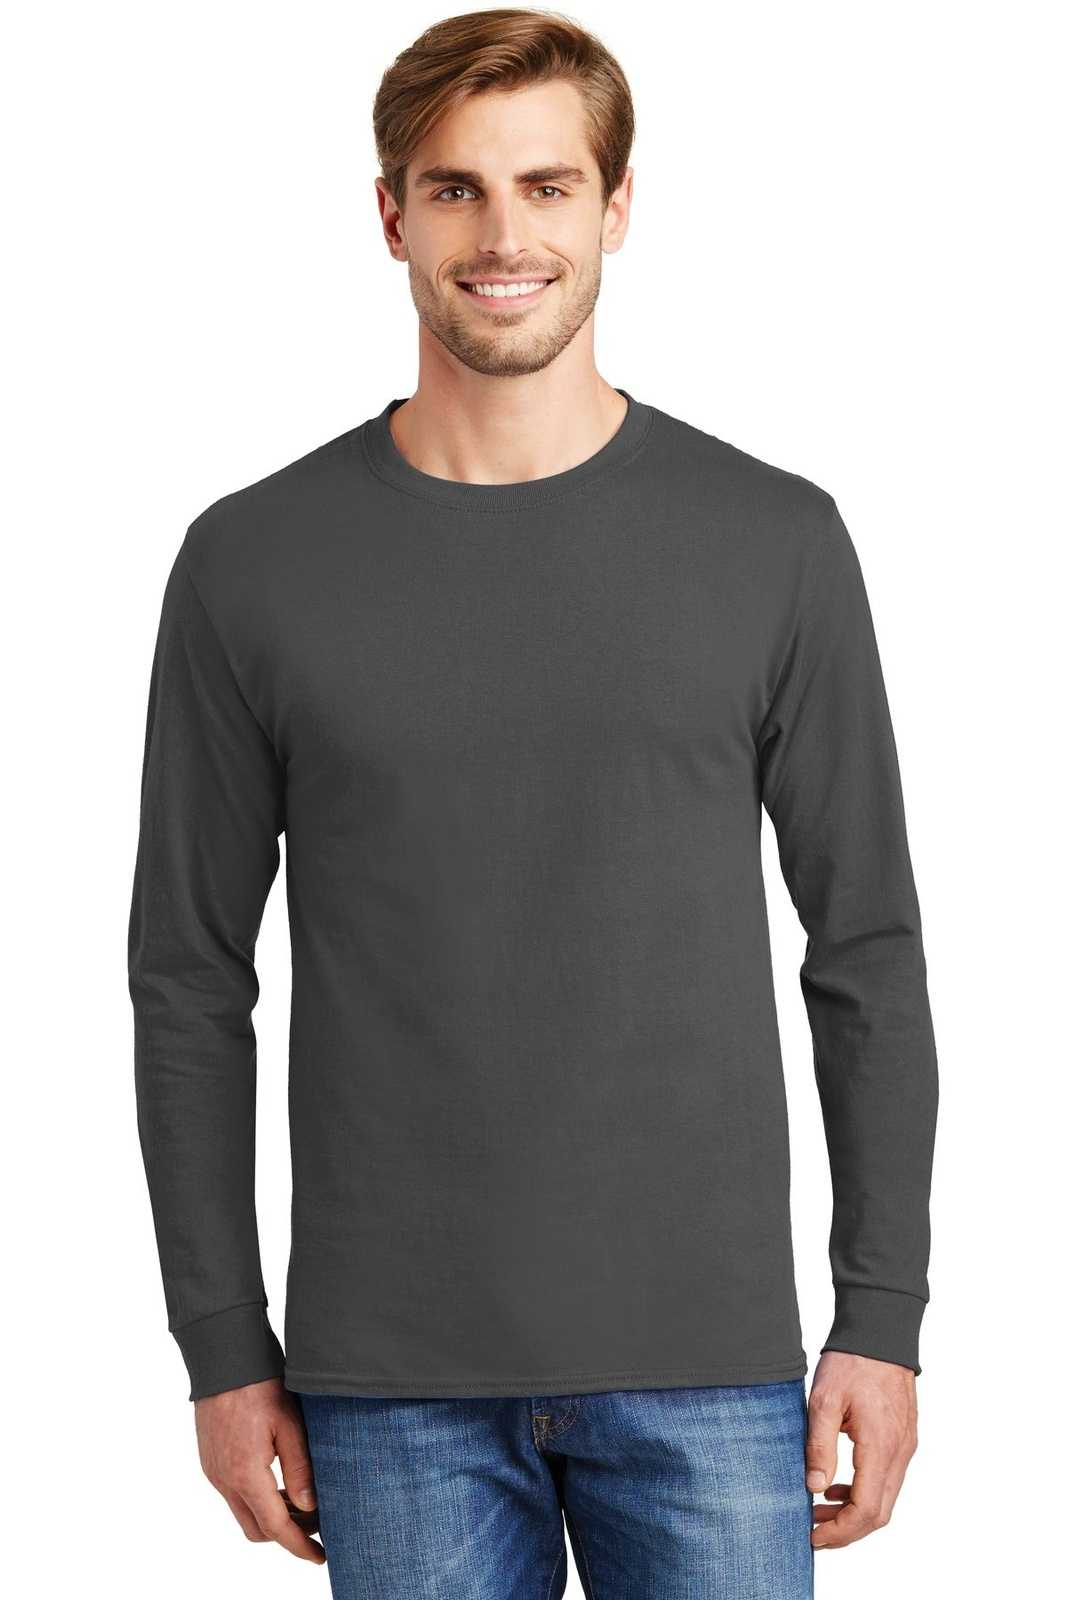 Hanes 5586 Tagless 100% Cotton Long Sleeve T-Shirt - Smoke Gray - HIT a Double